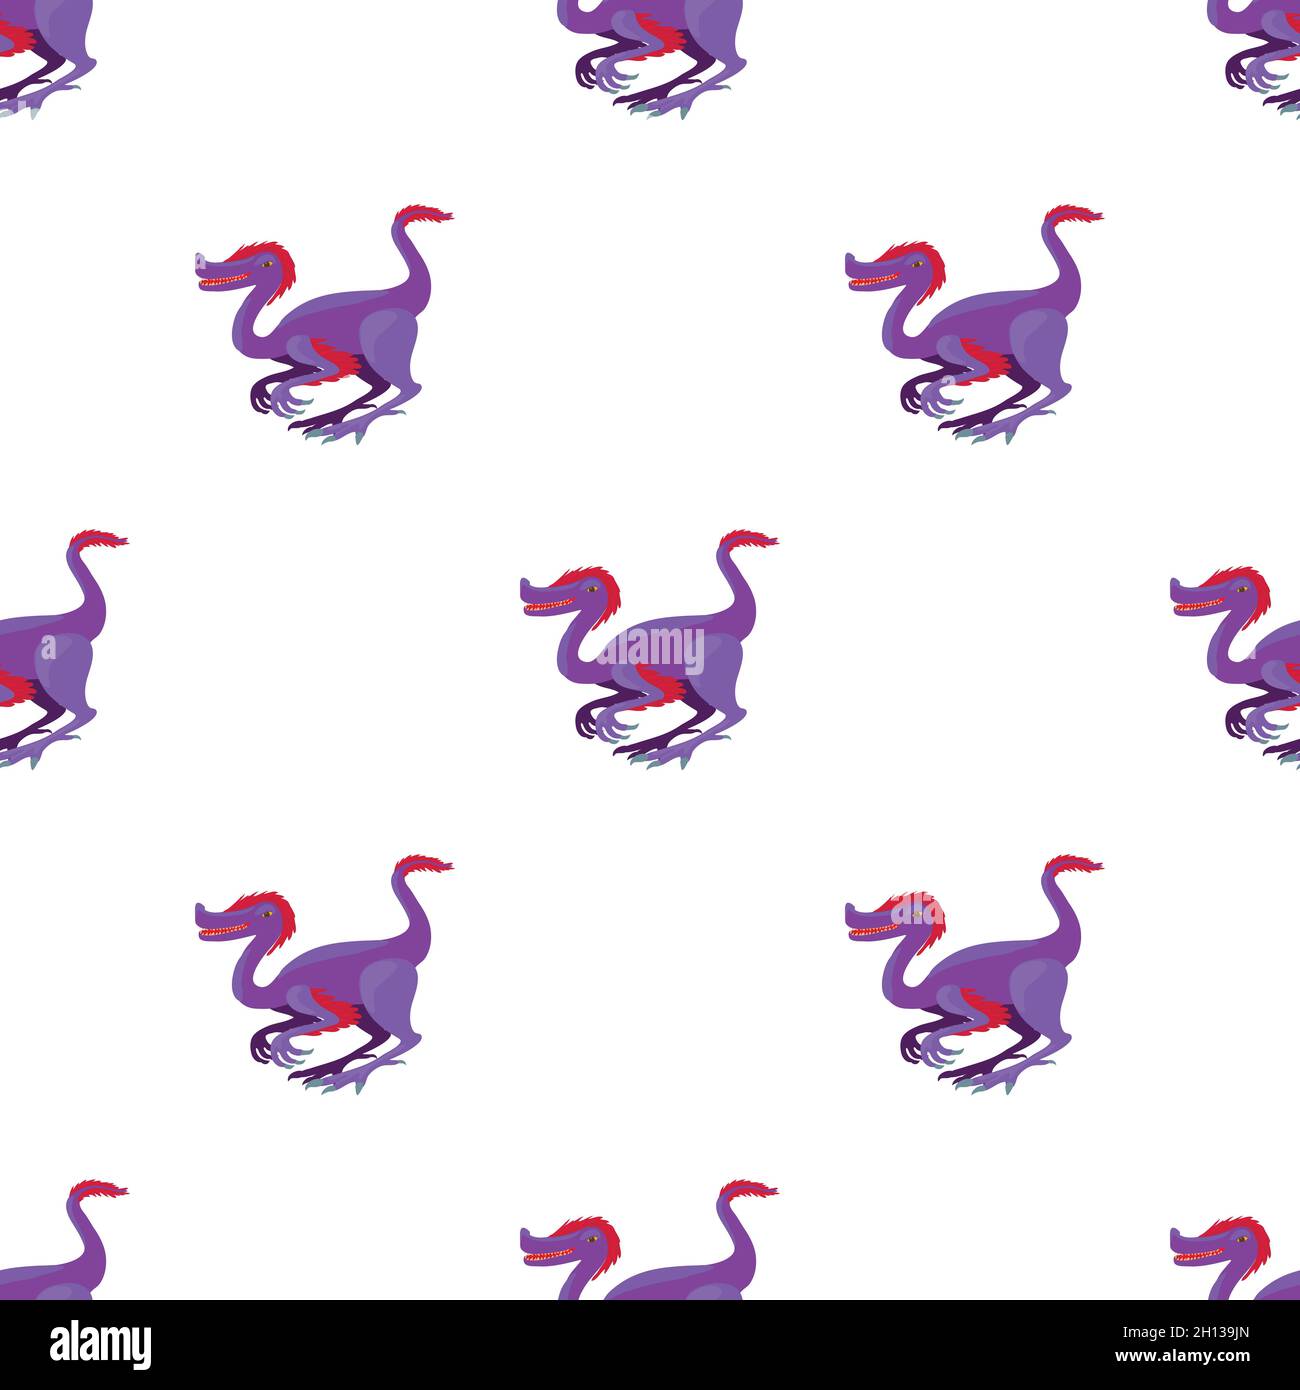 1300 Purple Dinosaur Stock Photos Pictures  RoyaltyFree Images   iStock  Barney Pink dinosaur Purple hat